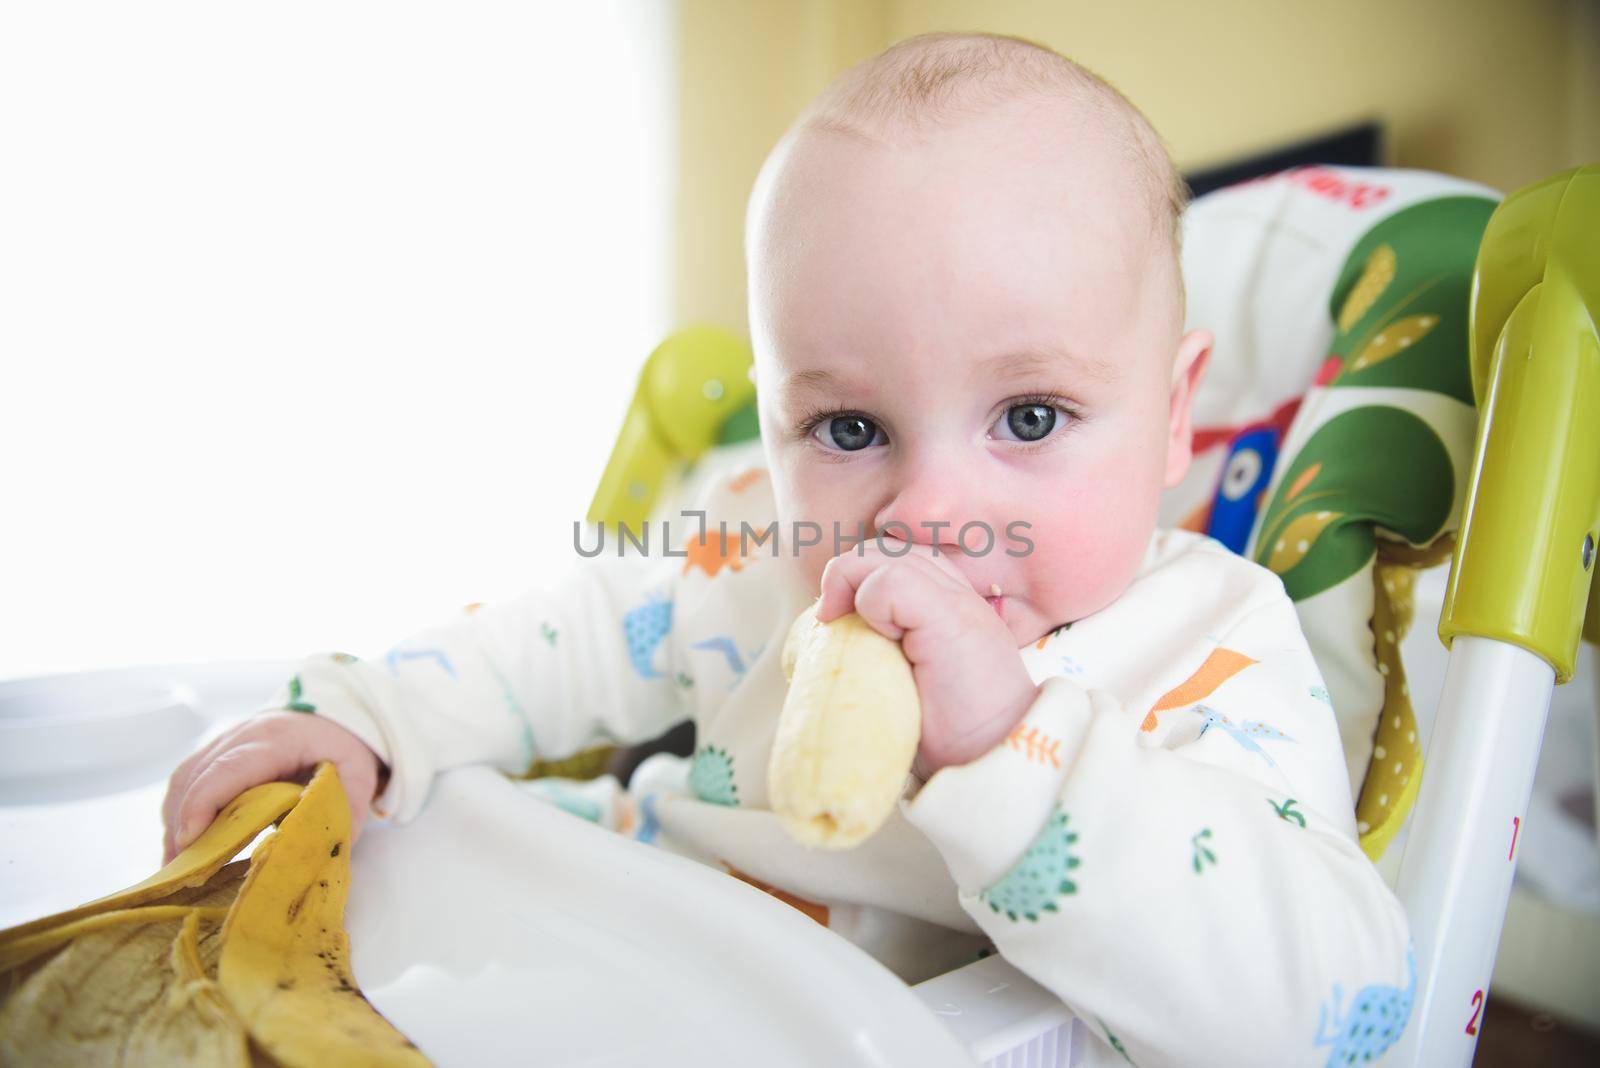 baby sitting in his chair eating banana by jcdiazhidalgo